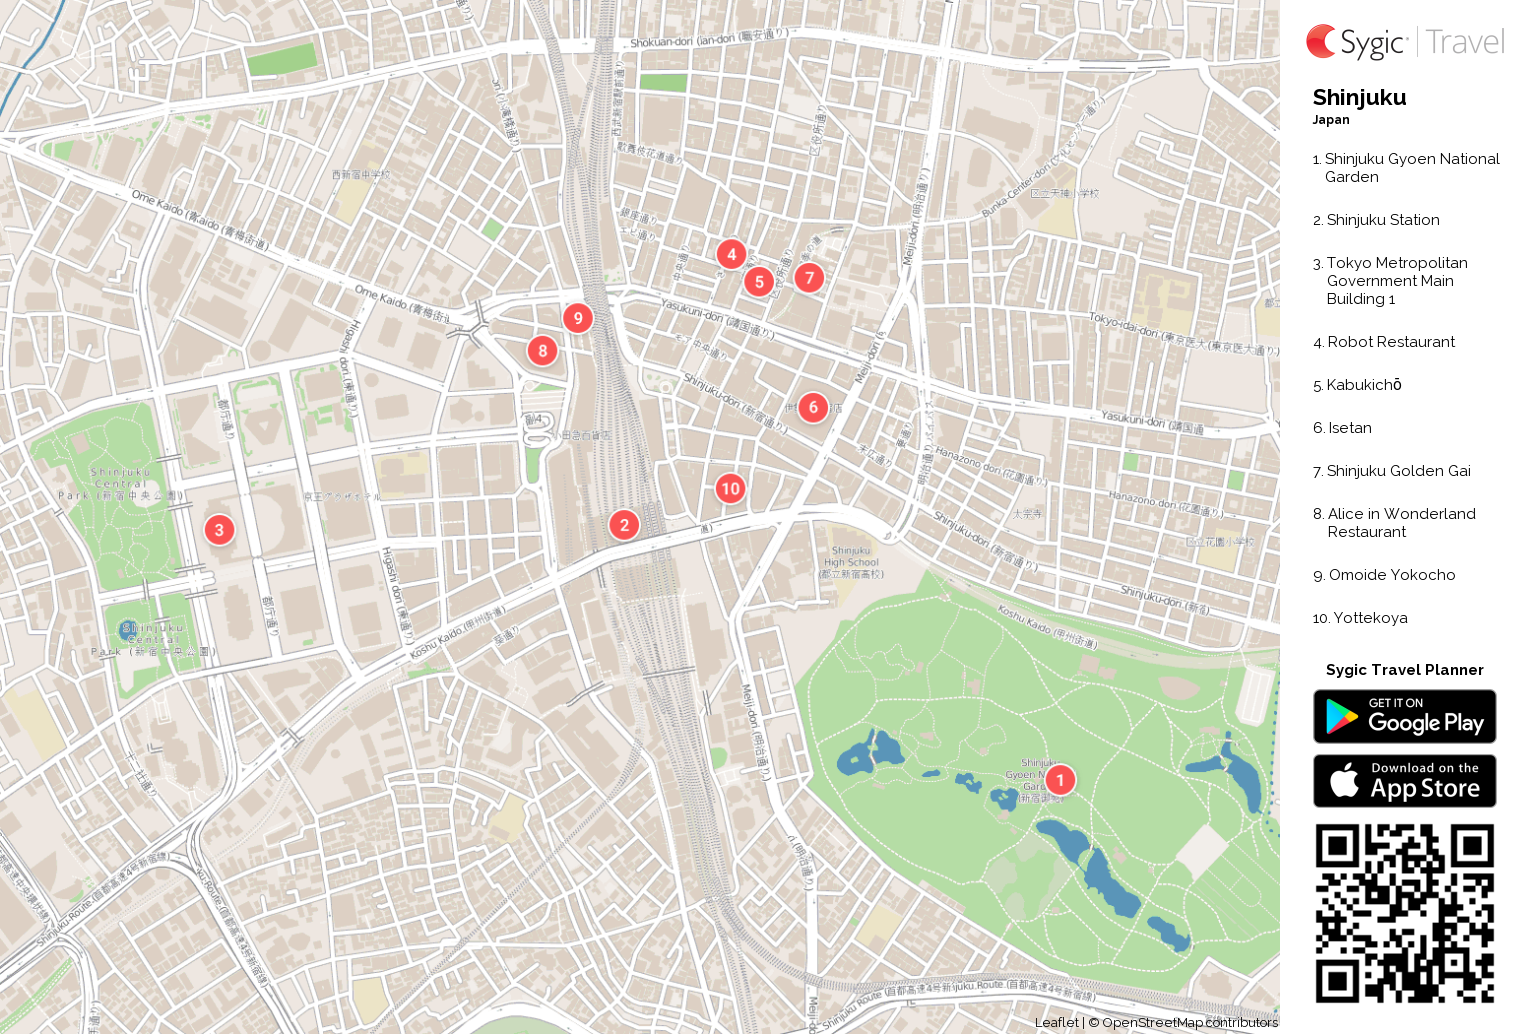 Shinjuku Printable Tourist Map | Sygic Travel